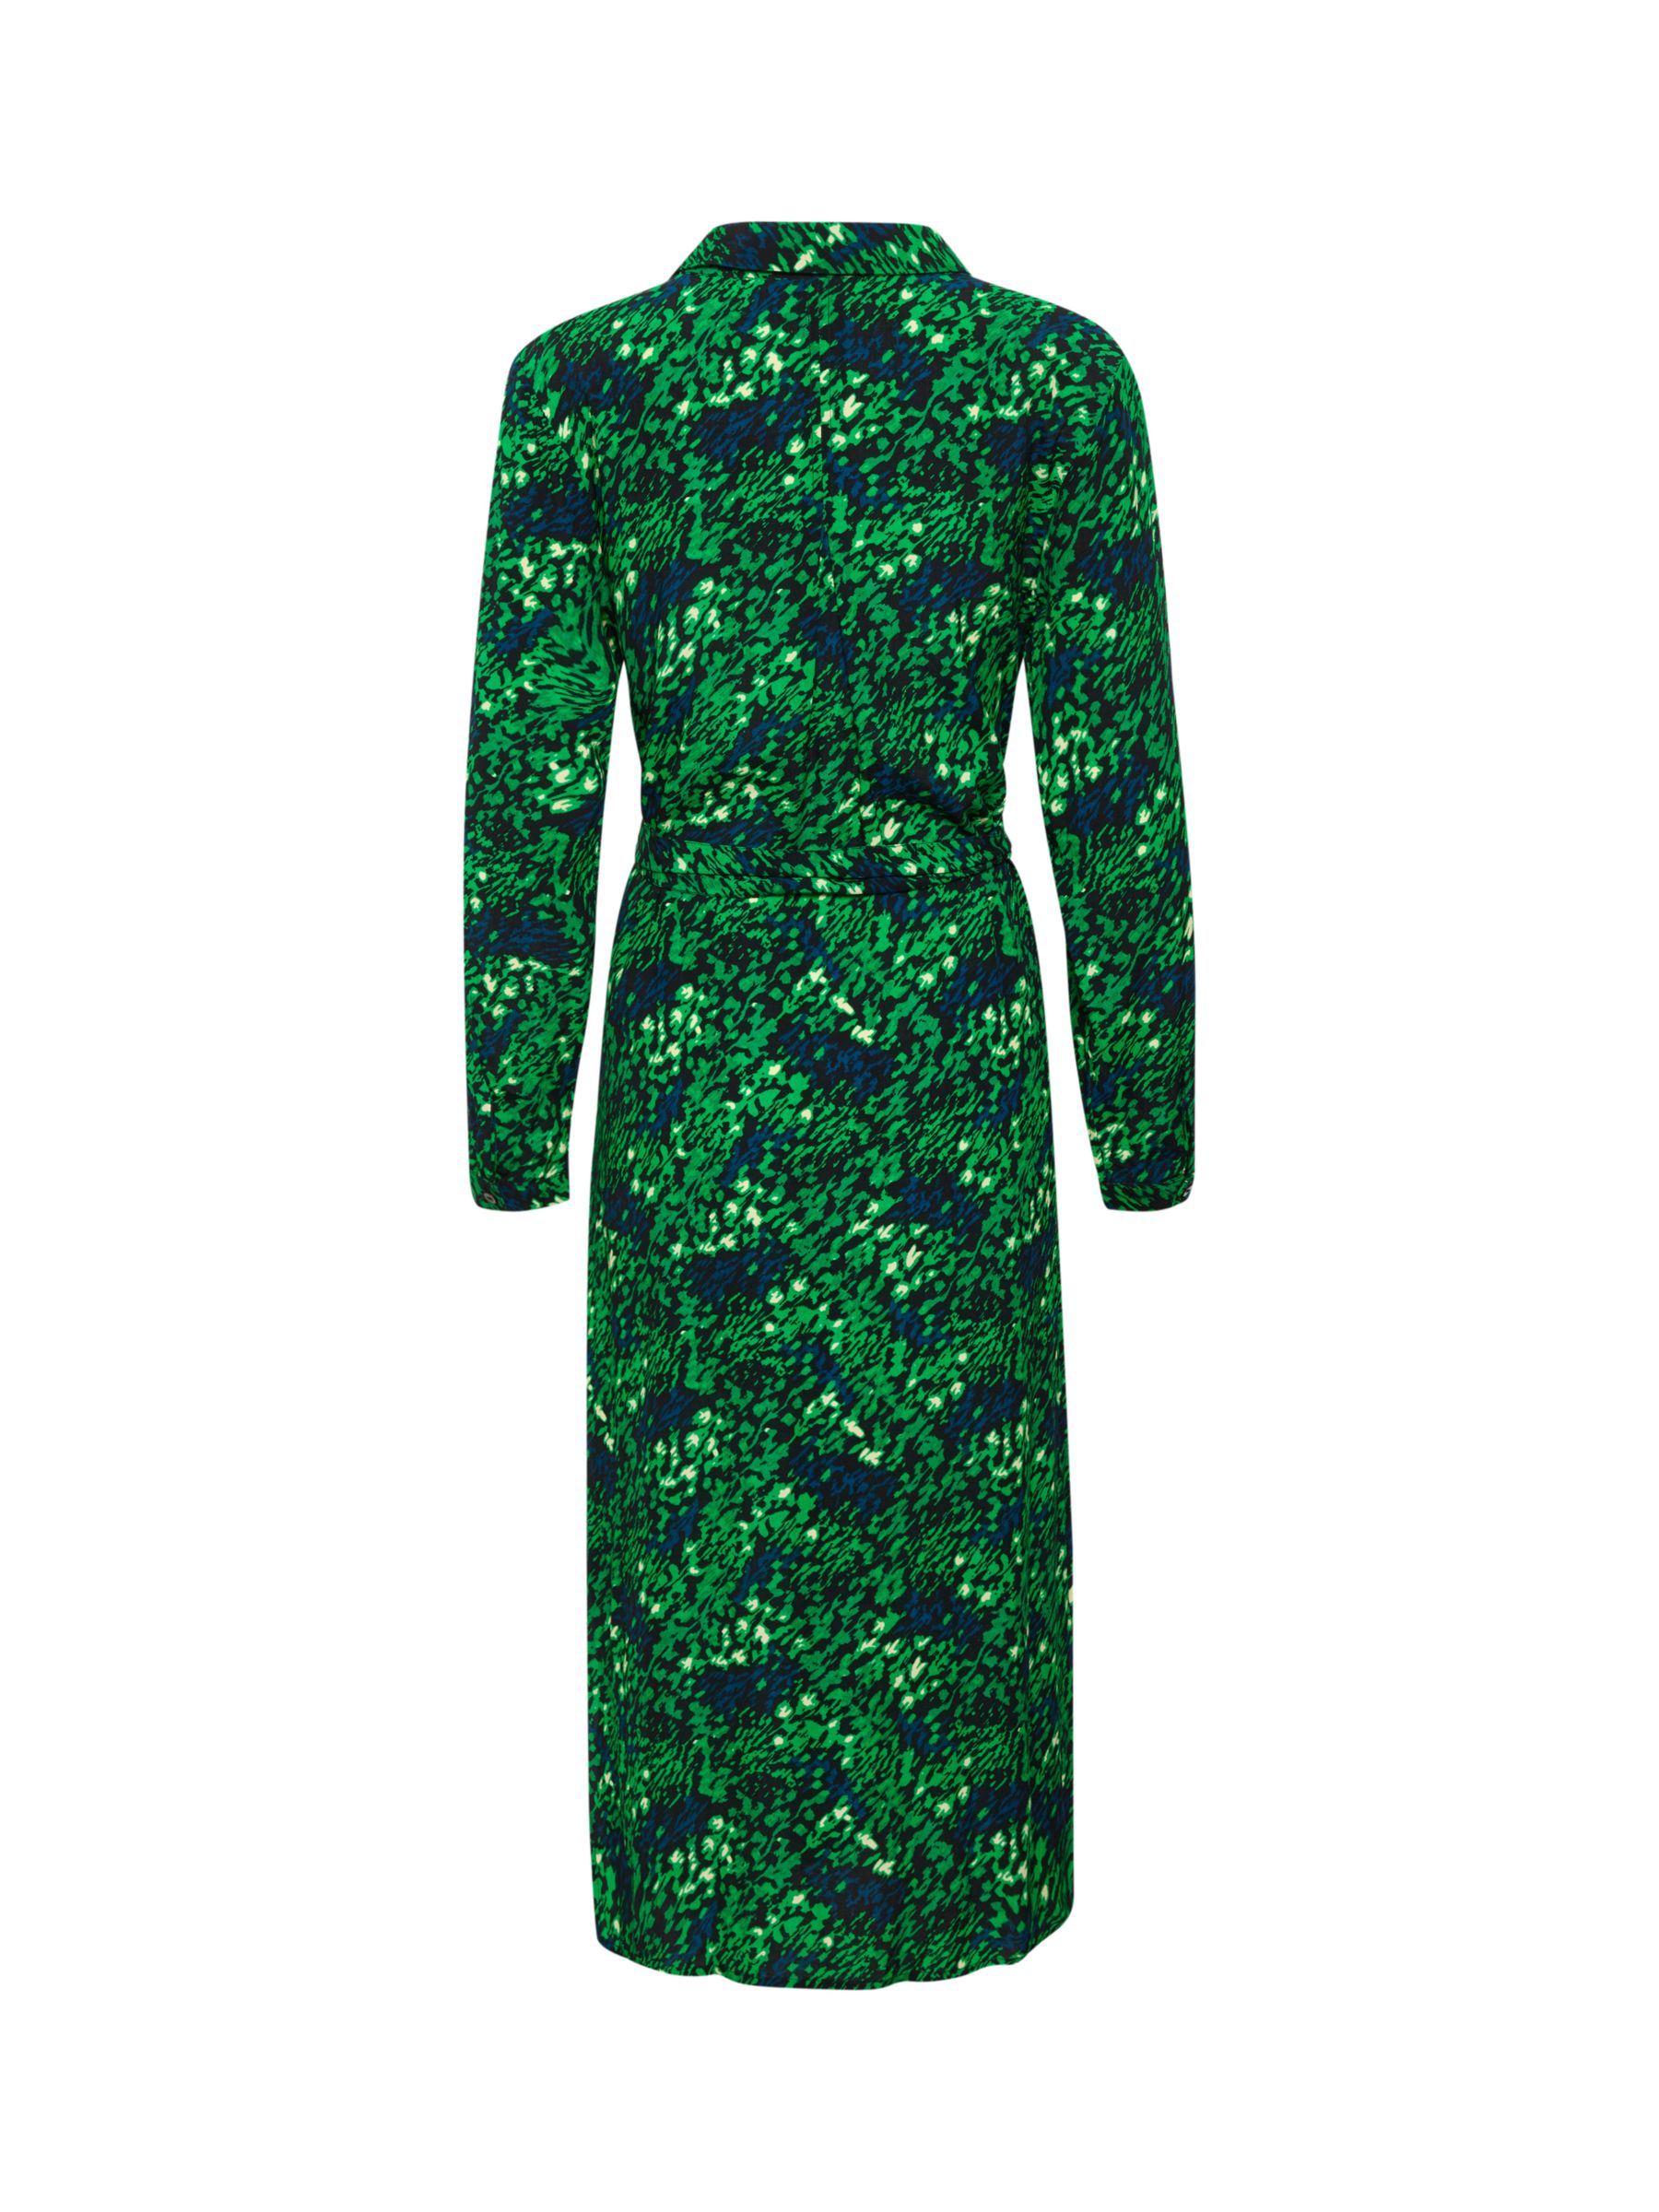 Print Dress, Shirt Saint Tropez Blanca at Verdant Midi Long Sleeve Green Brushed Abstract John Partners Lewis &